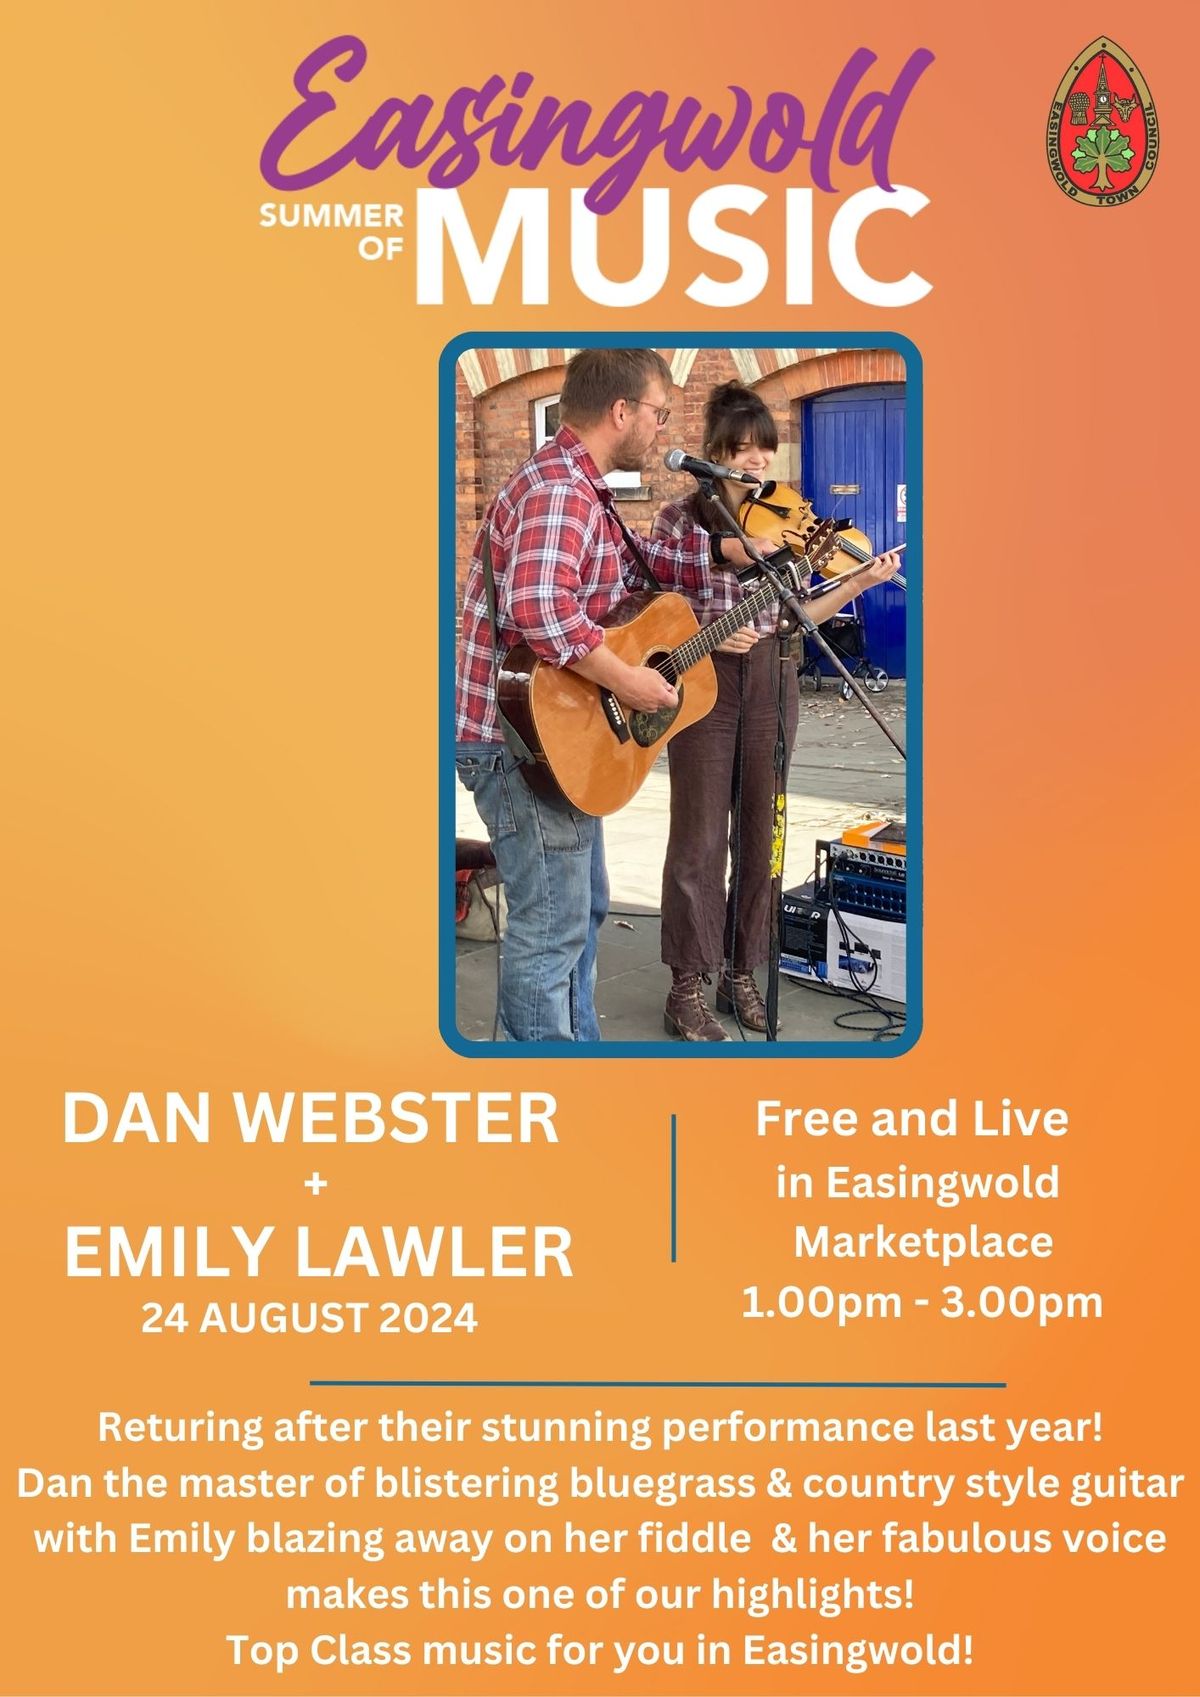 Easingwold Summer of Music - Dan Webster + Emily Lawler